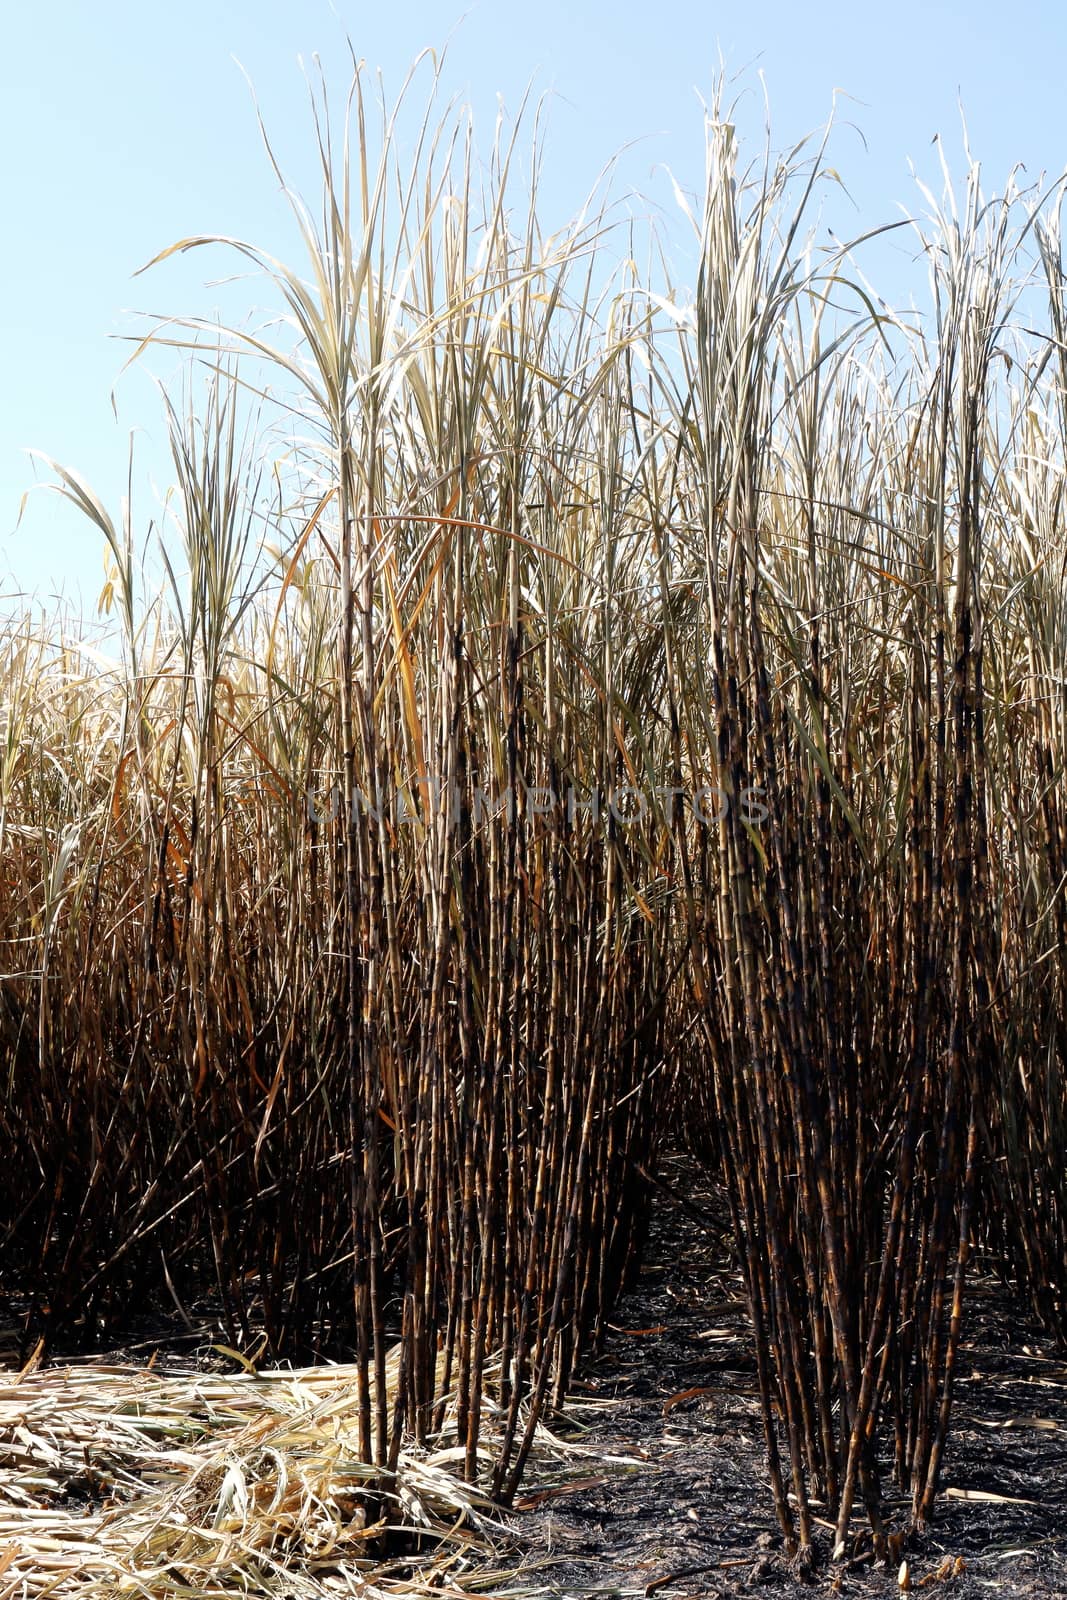 Sugarcane plantation burn, sugarcane, sugarcane field is burned for harvesting, Background picture of sugar cane farmers farm